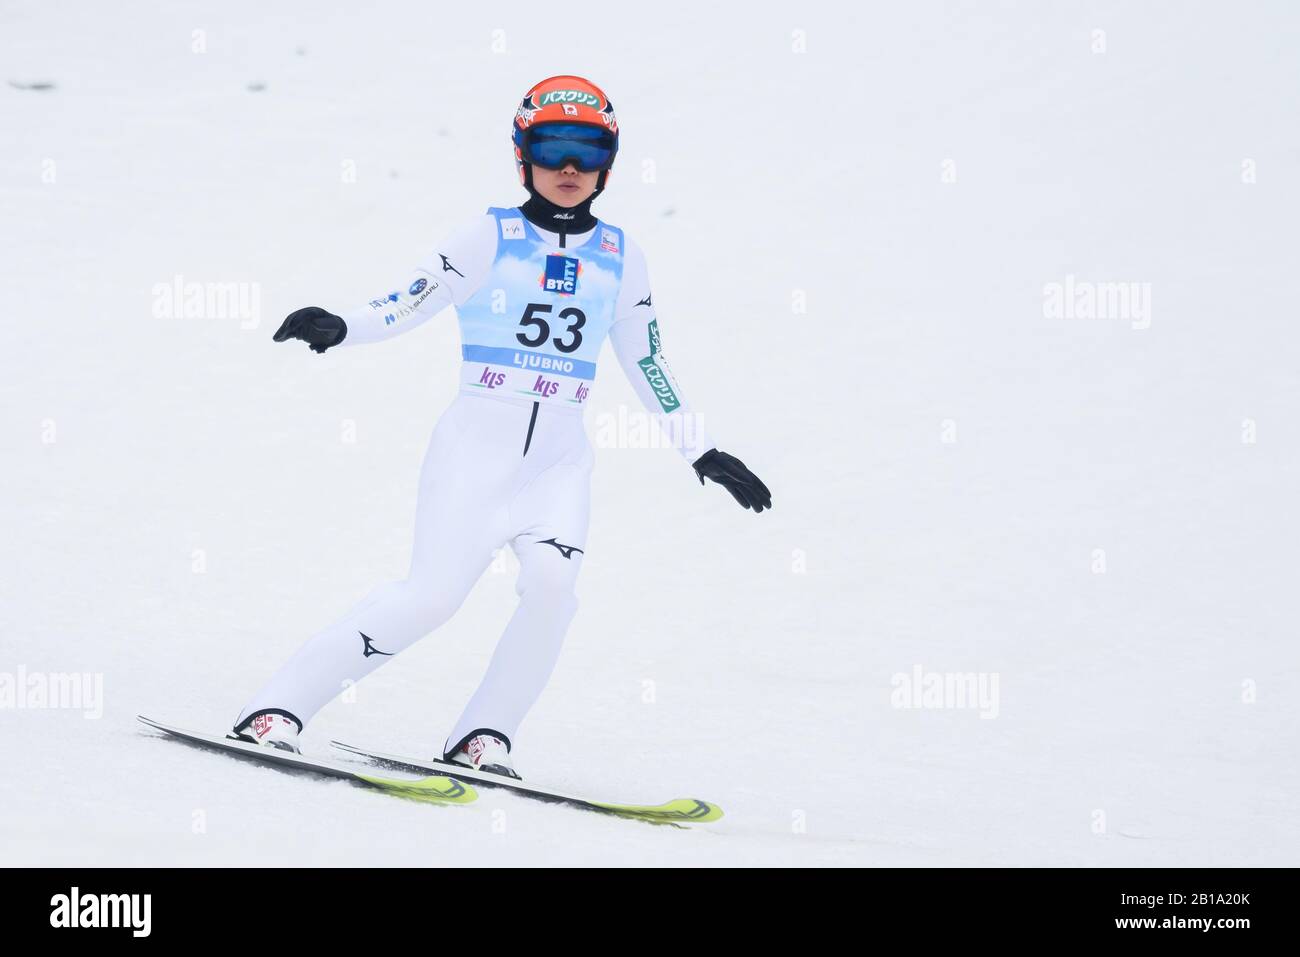 Yuki Ito of Japan competes during the FIS Ski Jumping World Cup Ljubno 2020  February 23, 2020  in Ljubno, Slovenia. (Photo by Rok Rakun/Pacific Press/Sipa USA) Stock Photo